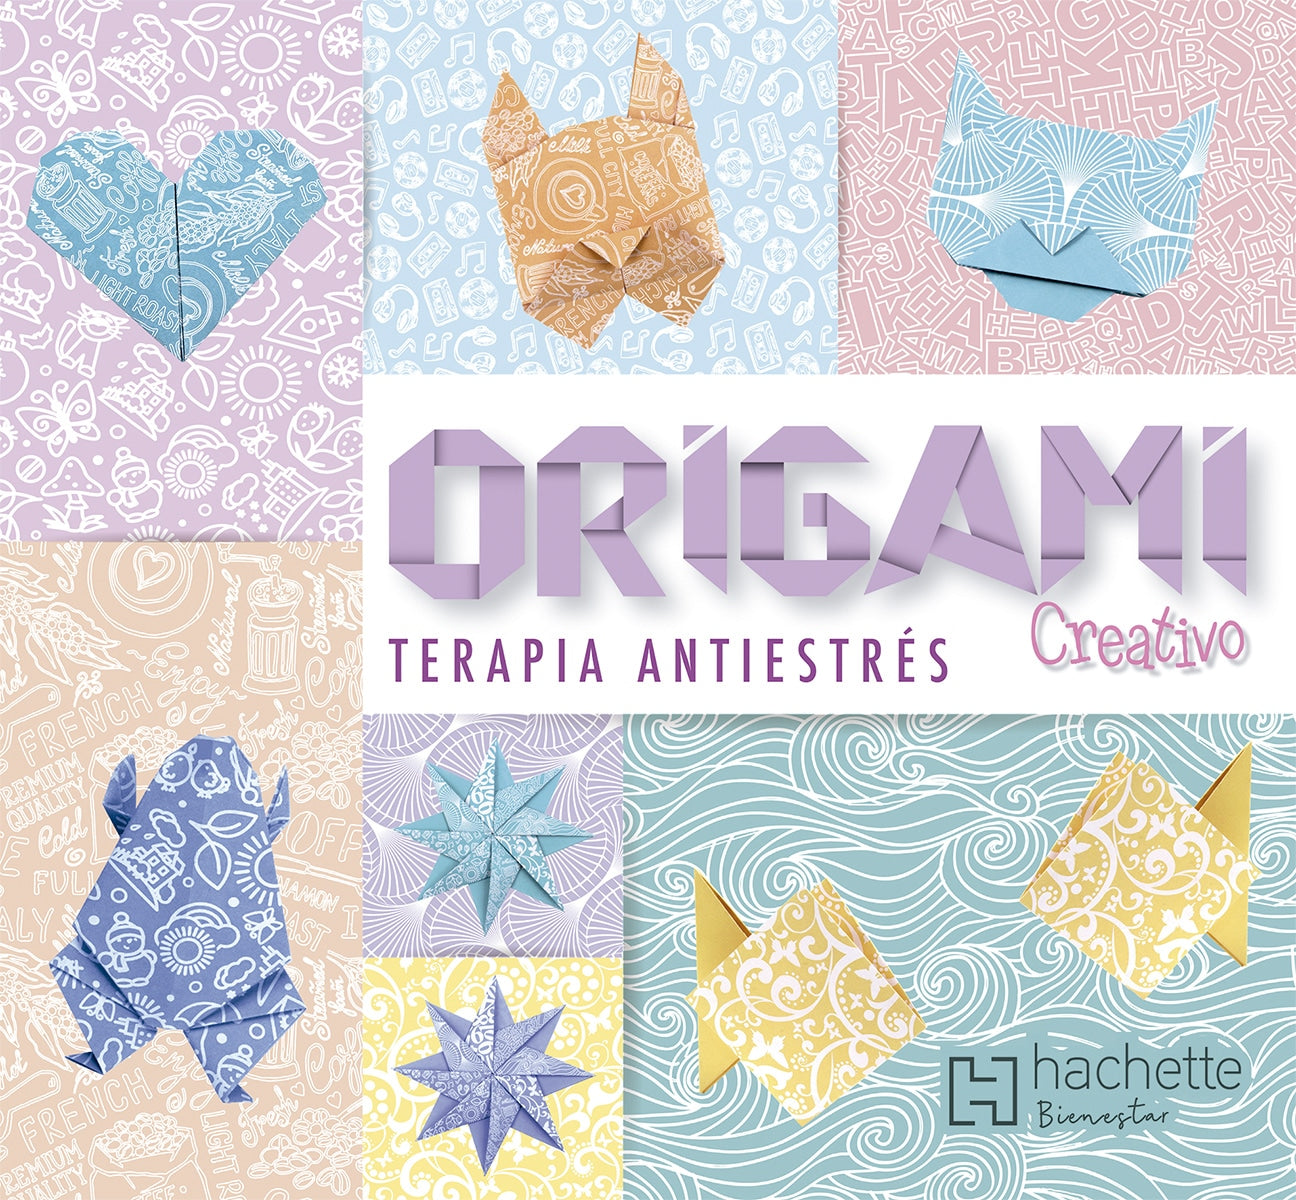 Origami creativo, terapia antiestrés